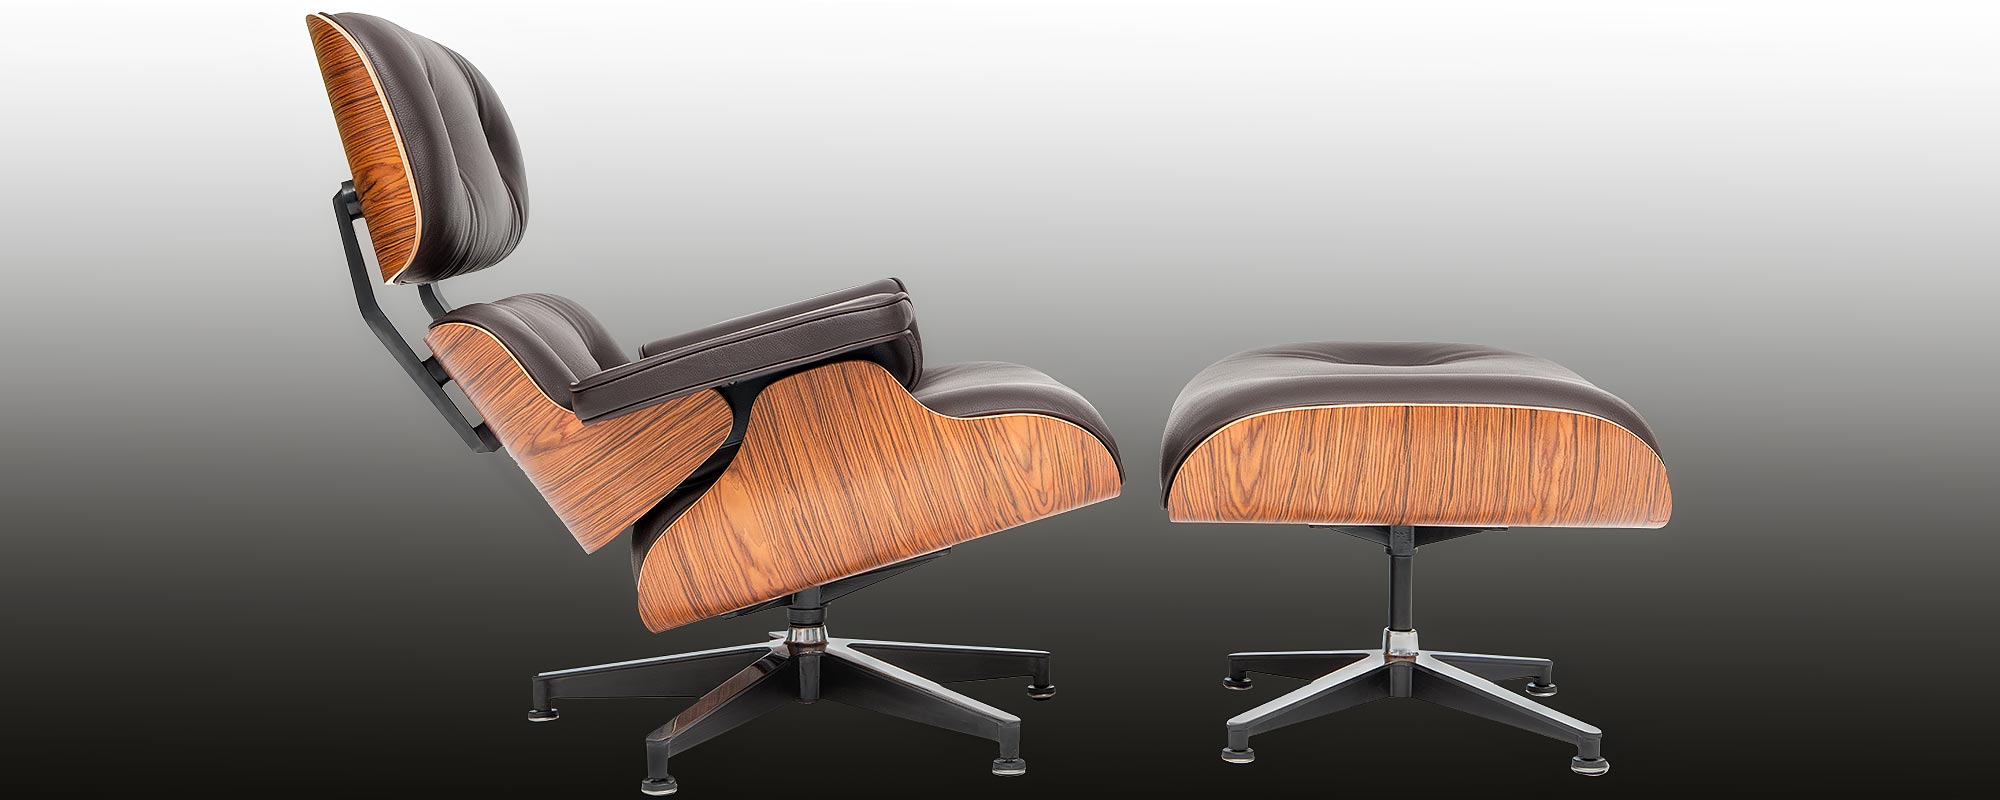 Pijl Vechter platform Eames designed Lounge Chair with Ottoman | a steelform design classic